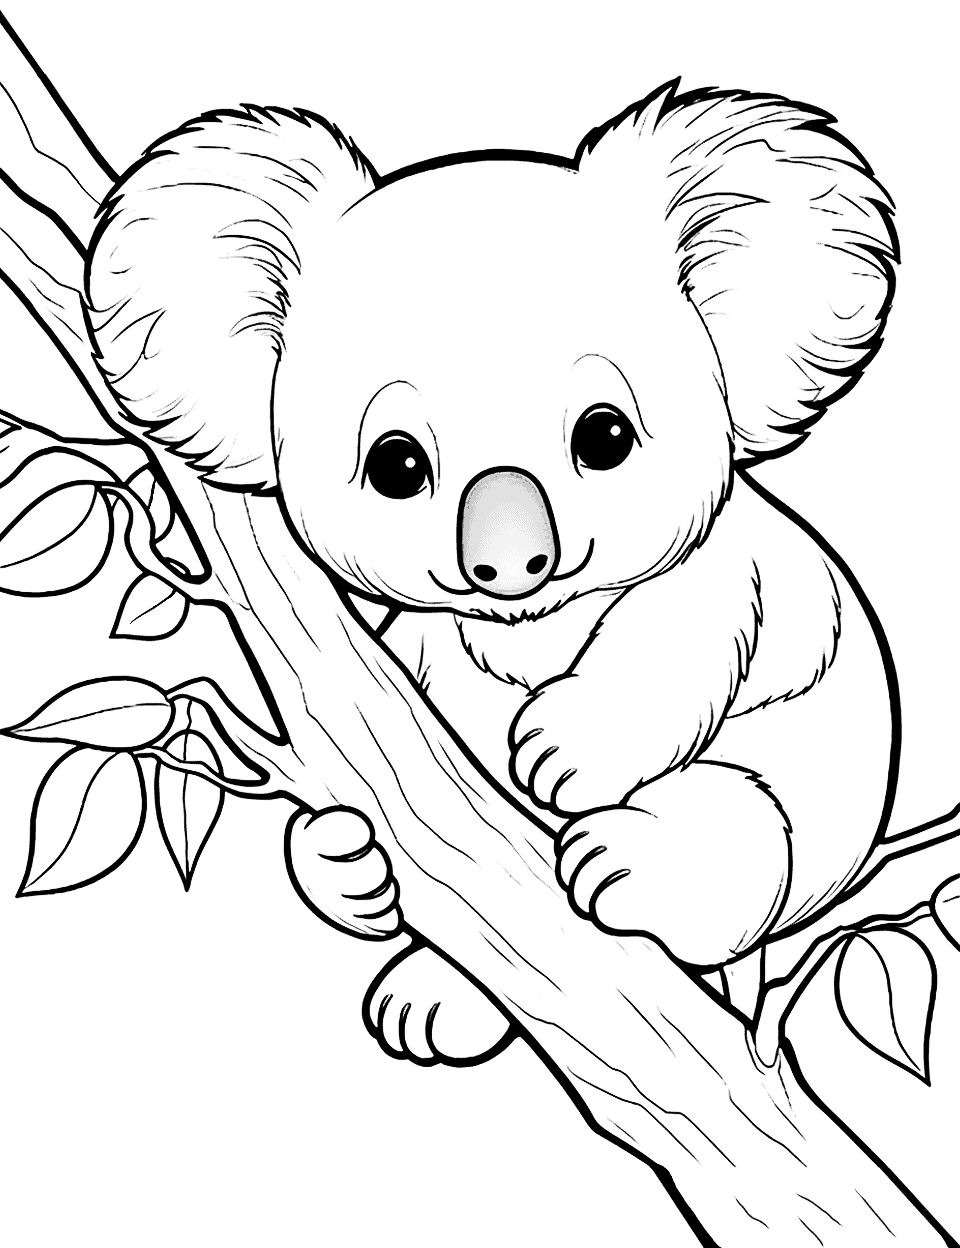 Sleepy Koala Animal Coloring Page - A sleepy koala cuddled up on a eucalyptus tree branch.